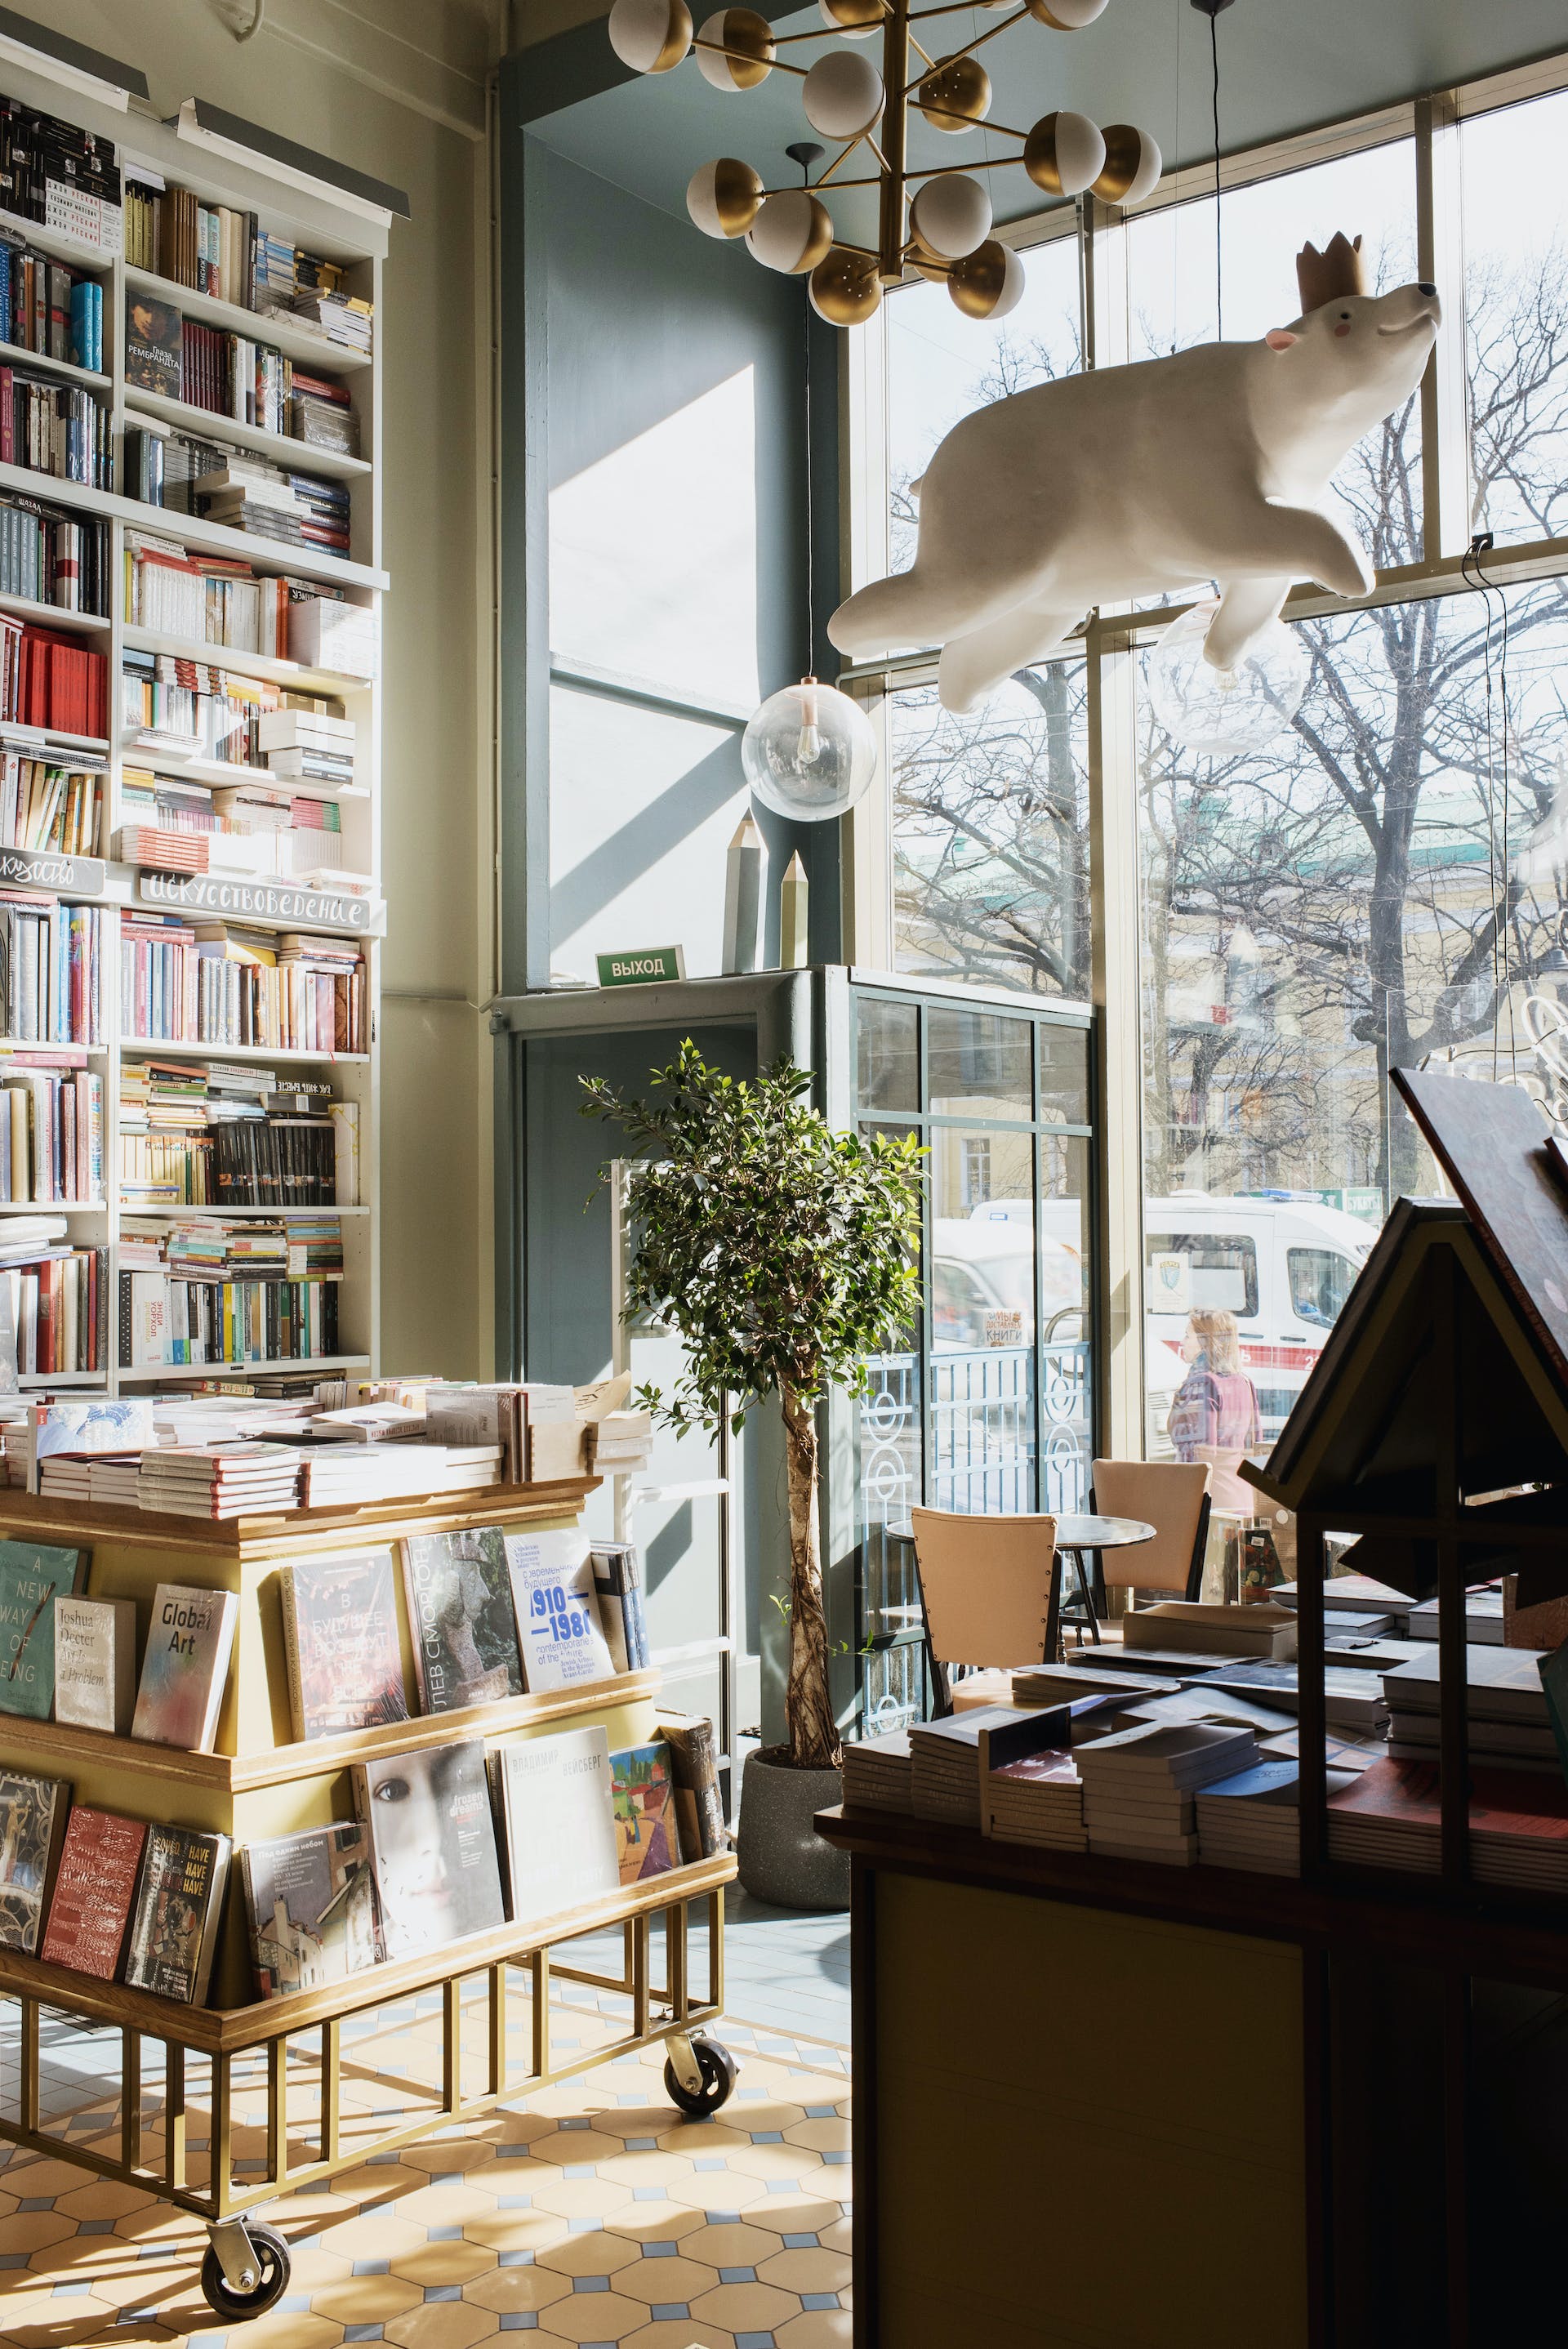 A bookstore | Source: Pexels